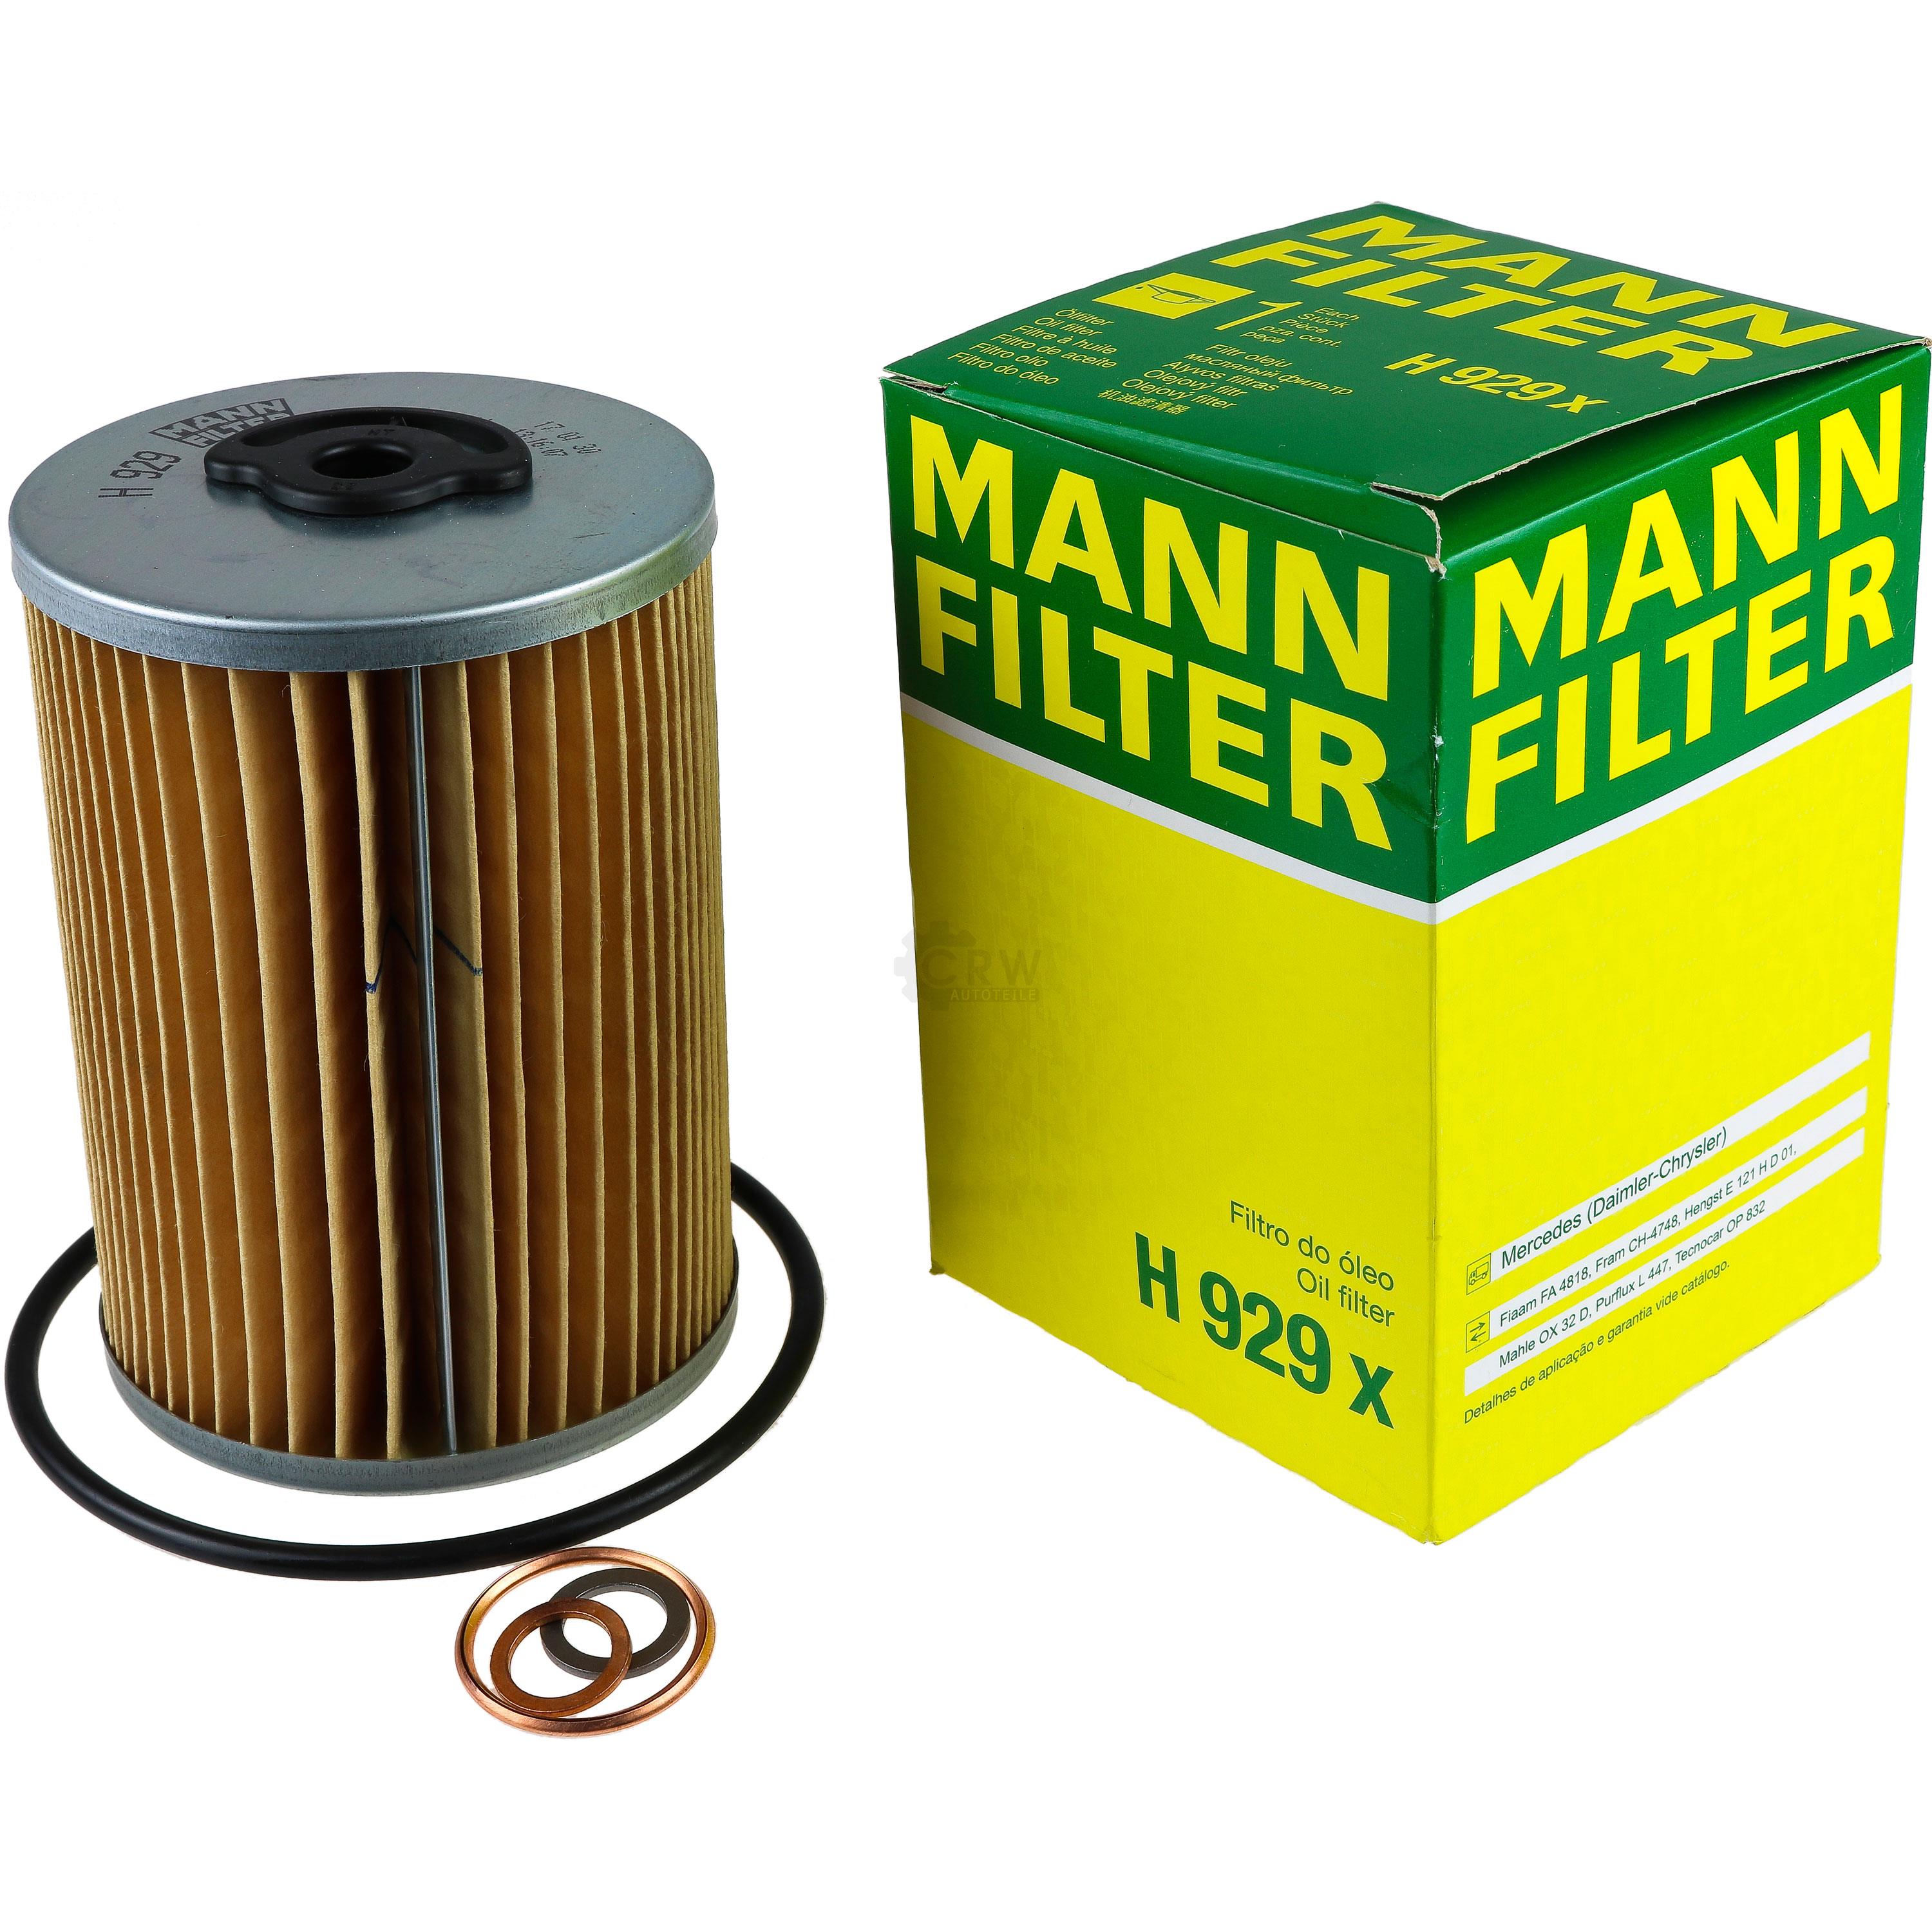 Масло фильтр мерседес. Mann Filter h 2826 Kit. Mann Filter Mercedes. Ман фильтр Mercedes. Оригинальный фильтр ман Мерседес 210.